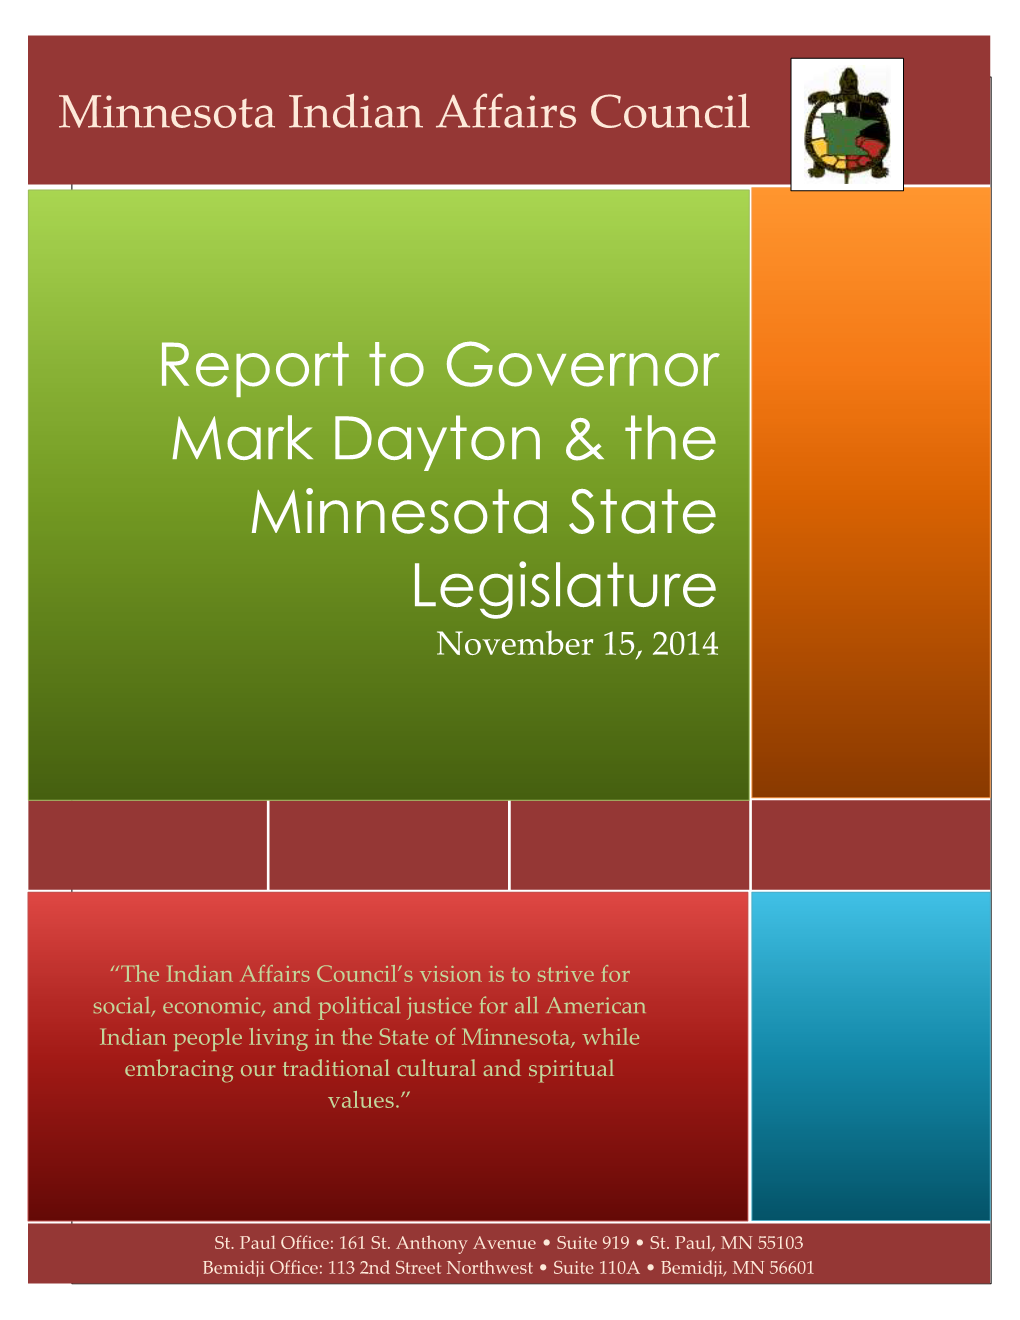 Report to Governor Mark Dayton & the Minnesota State Legislature